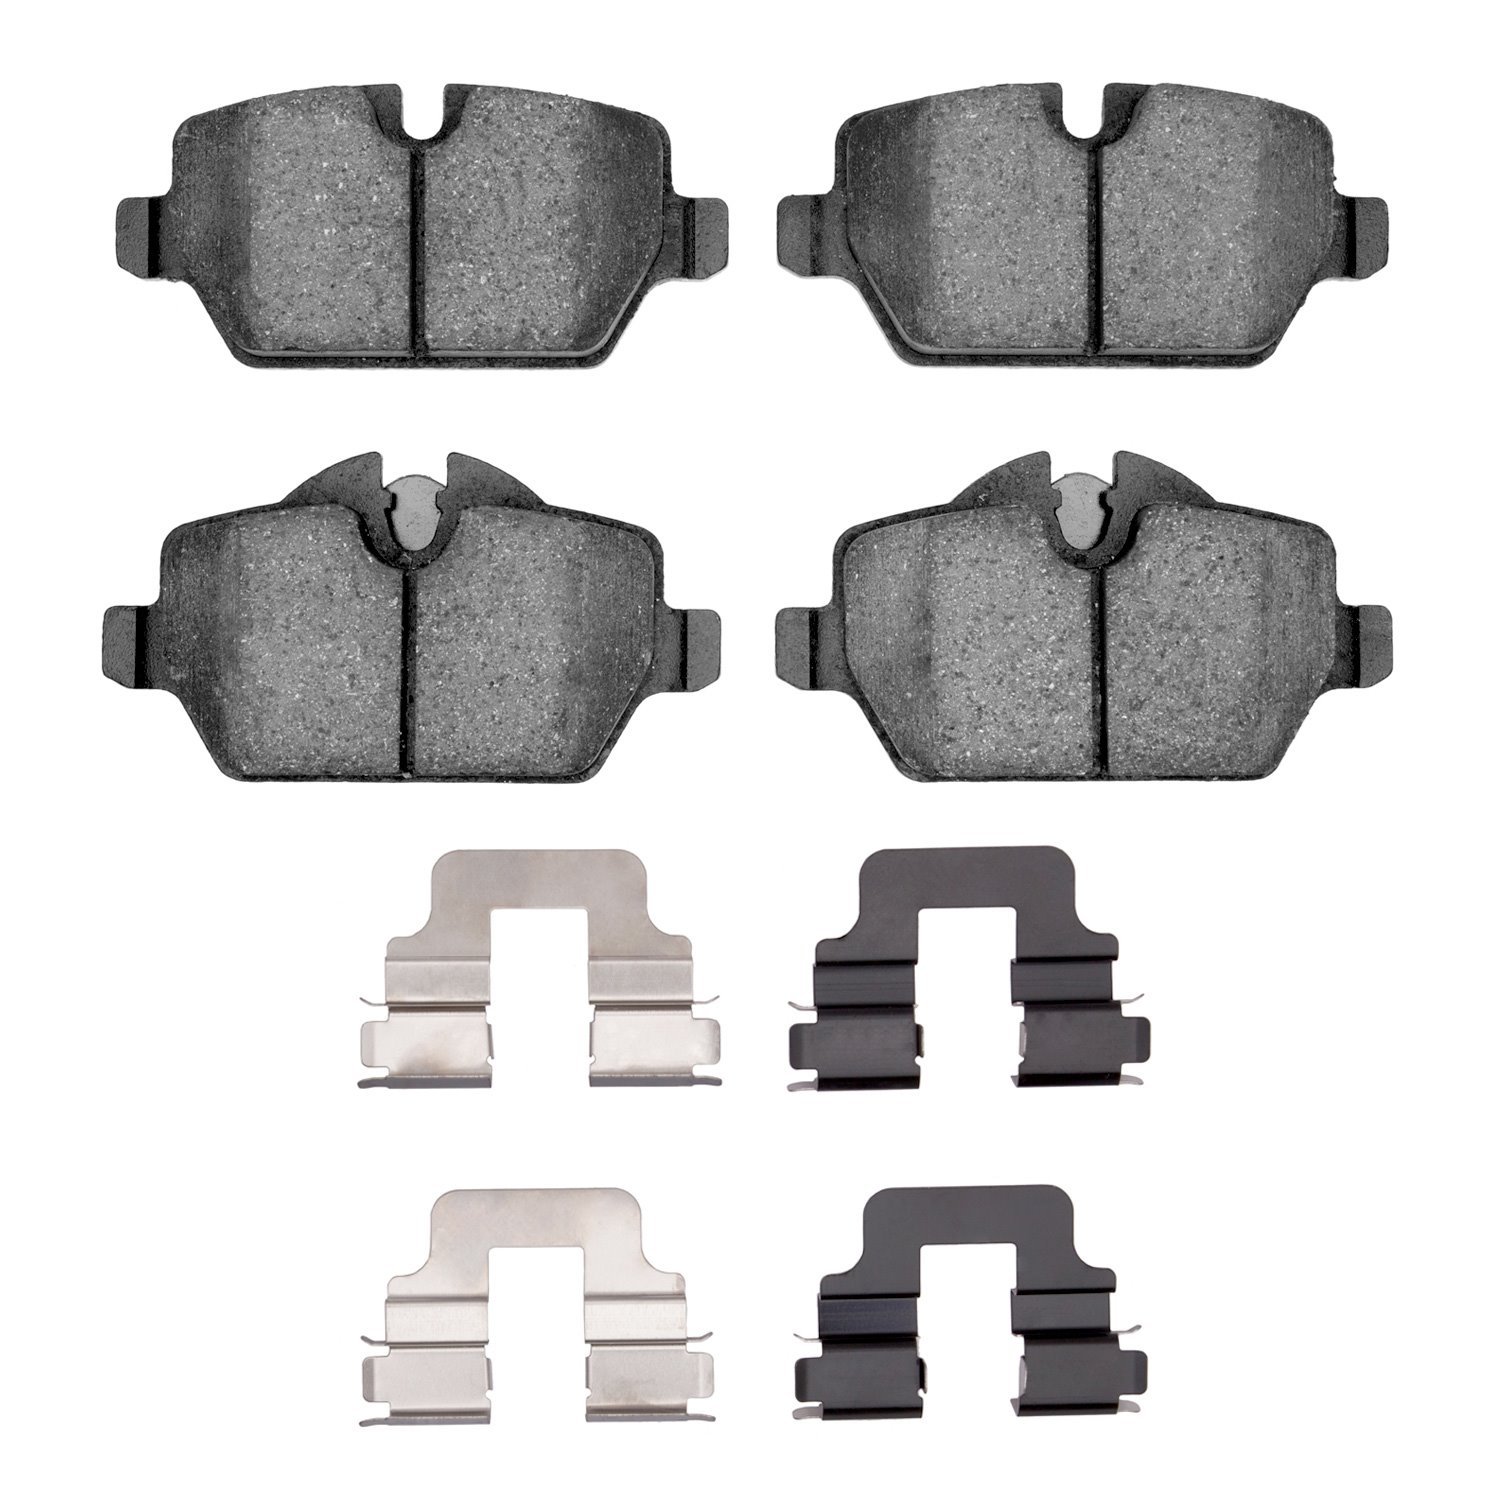 Ceramic Brake Pads & Hardware Kit, 2005-2016 Fits Multiple Makes/Models, Position: Rear